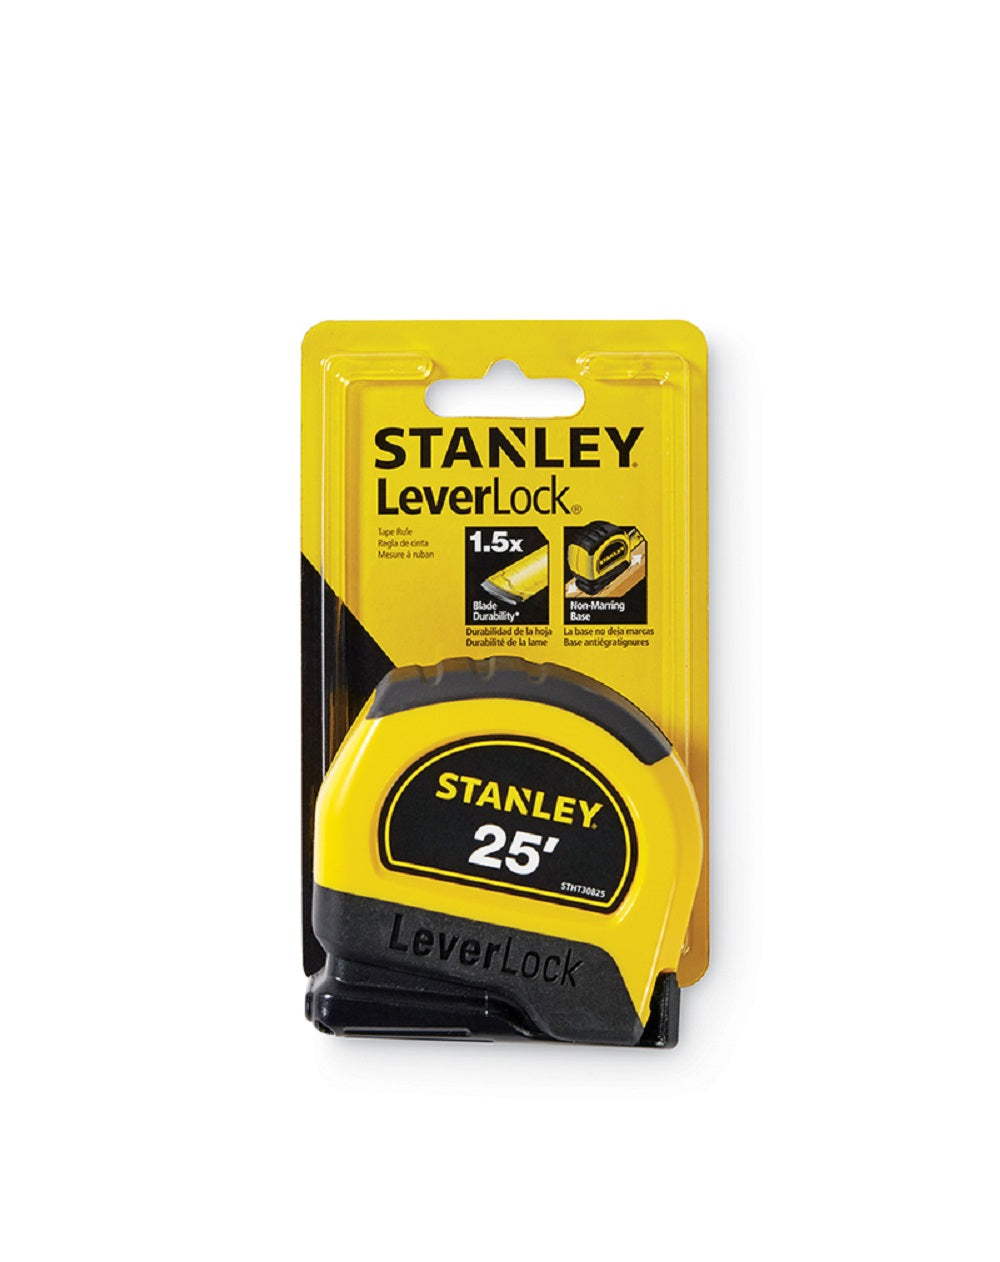 Stanley STHT30825 Leverlock Measuring Tape, Black/Yellow, 1 inch x 25 feet